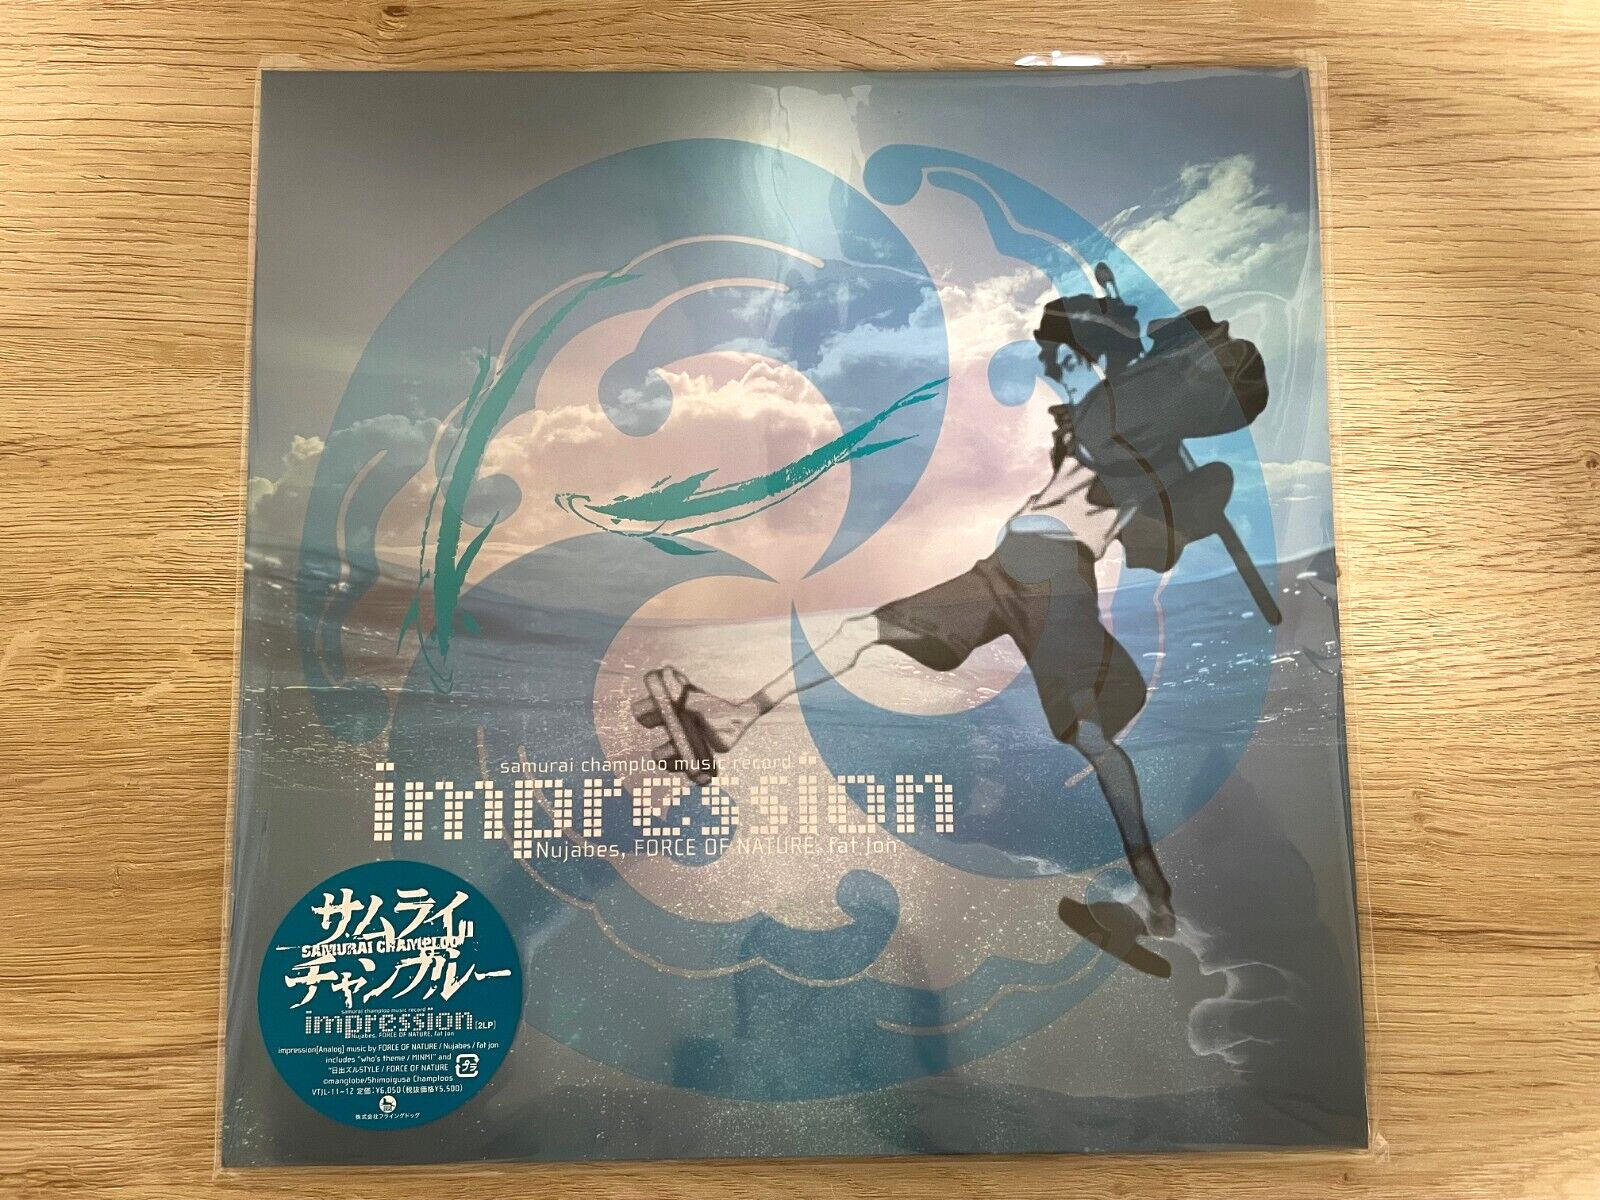 Samurai Champloo Nujabes impression Vinyl Record limited edition 2LP Japan